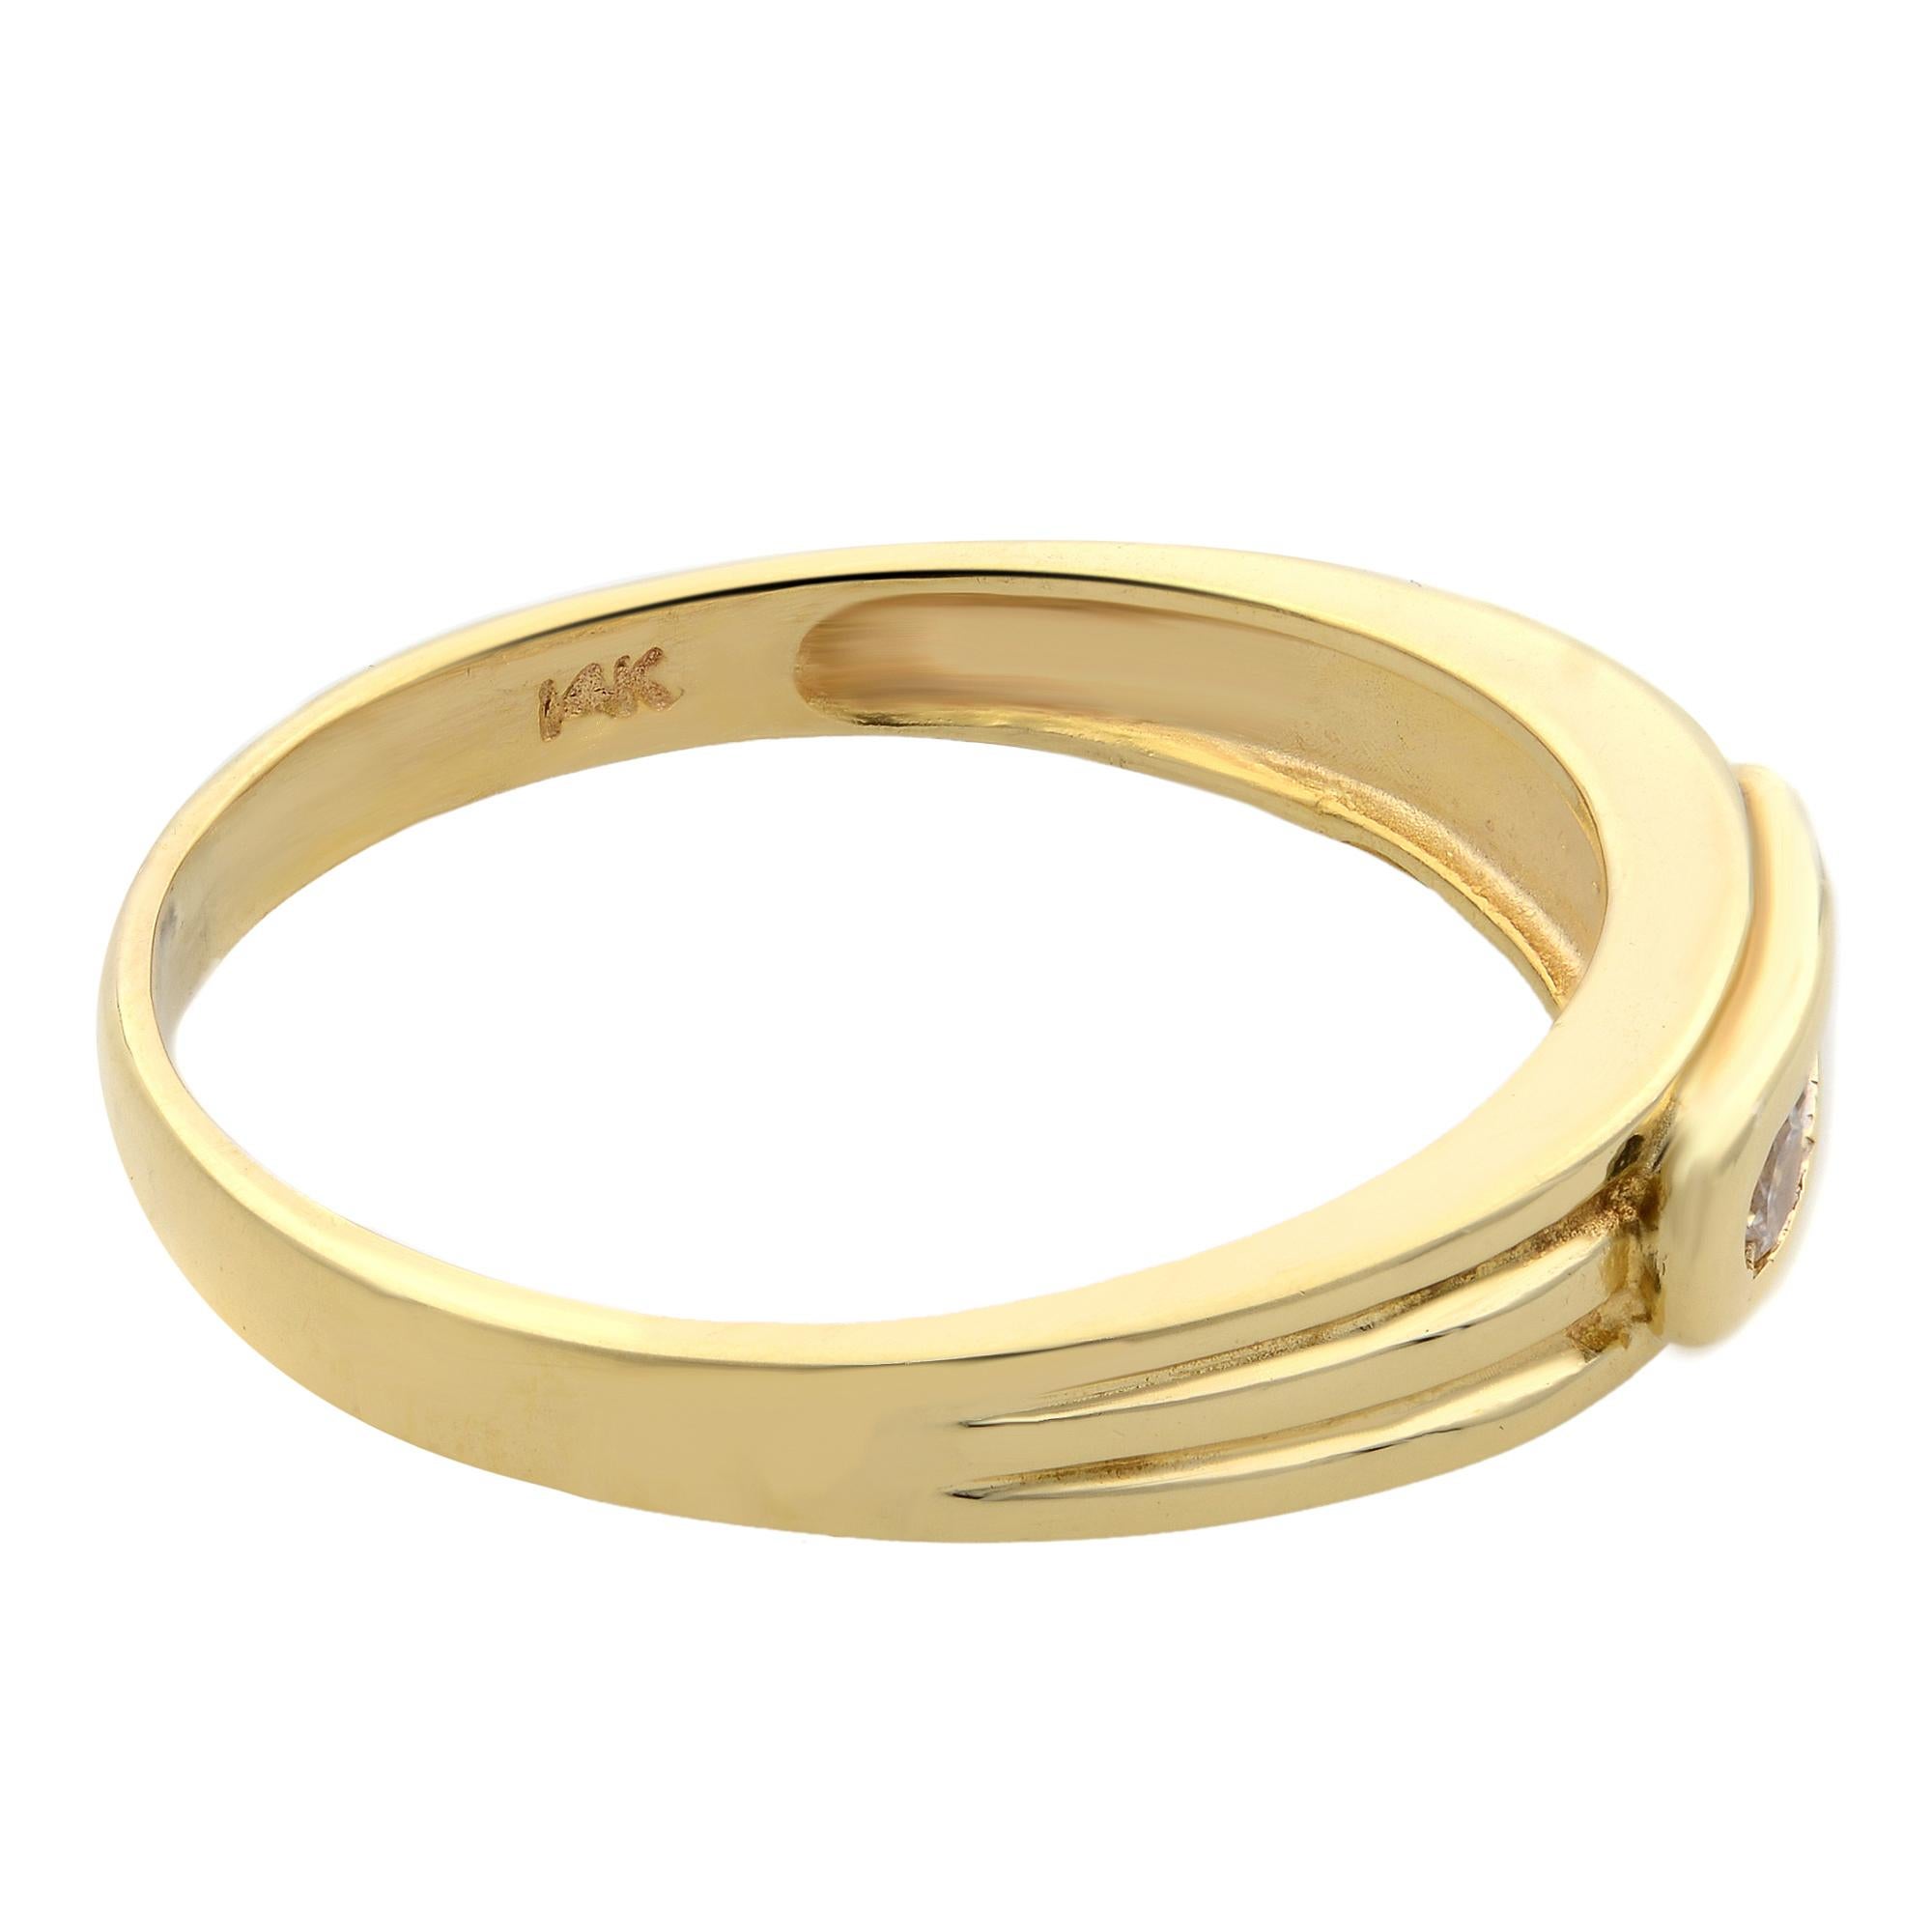 Round Cut Rachel Koen 0.25Cttw Diamond Ladies Band Ring 14K Yellow Gold Size 9.75 For Sale